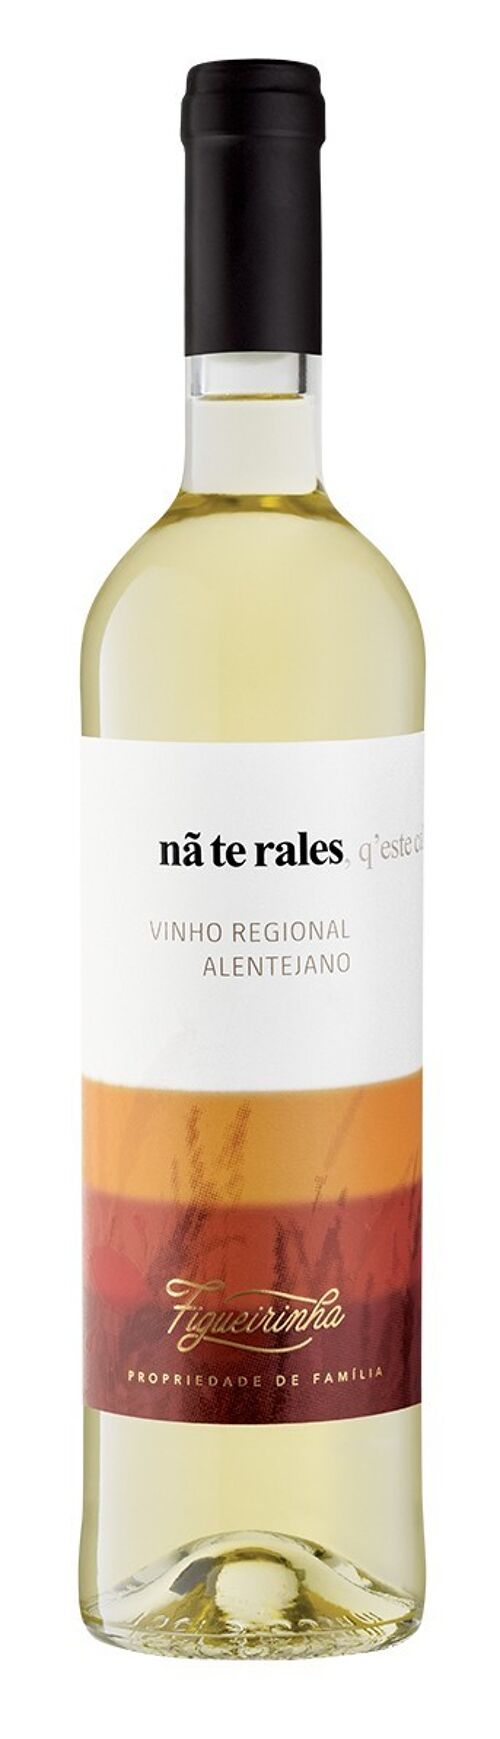 Herdade da Figueirinha - Nã Te Rales Branco Alentejo Regional Wine - Rosé / Pink Wine - 0,75 Lt Bottle